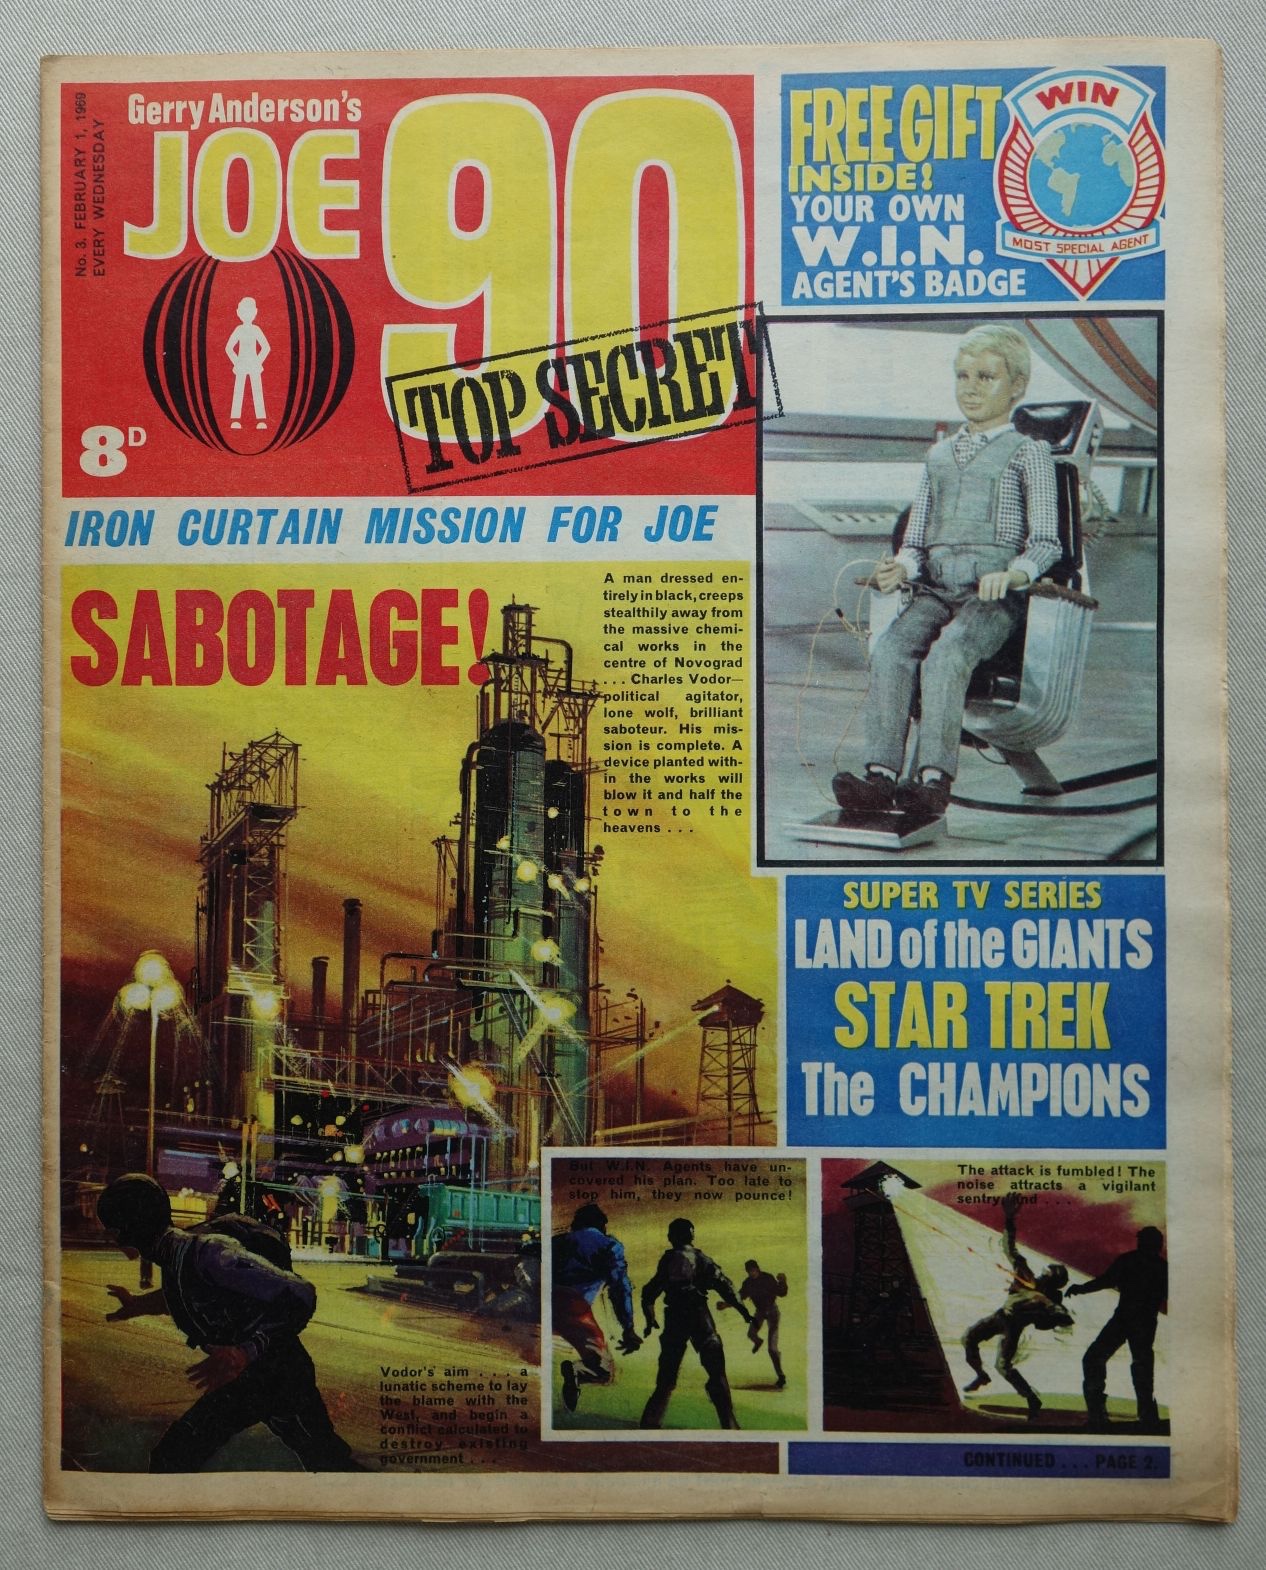 Joe 90 No. 3 - cover dated 1st February 1969